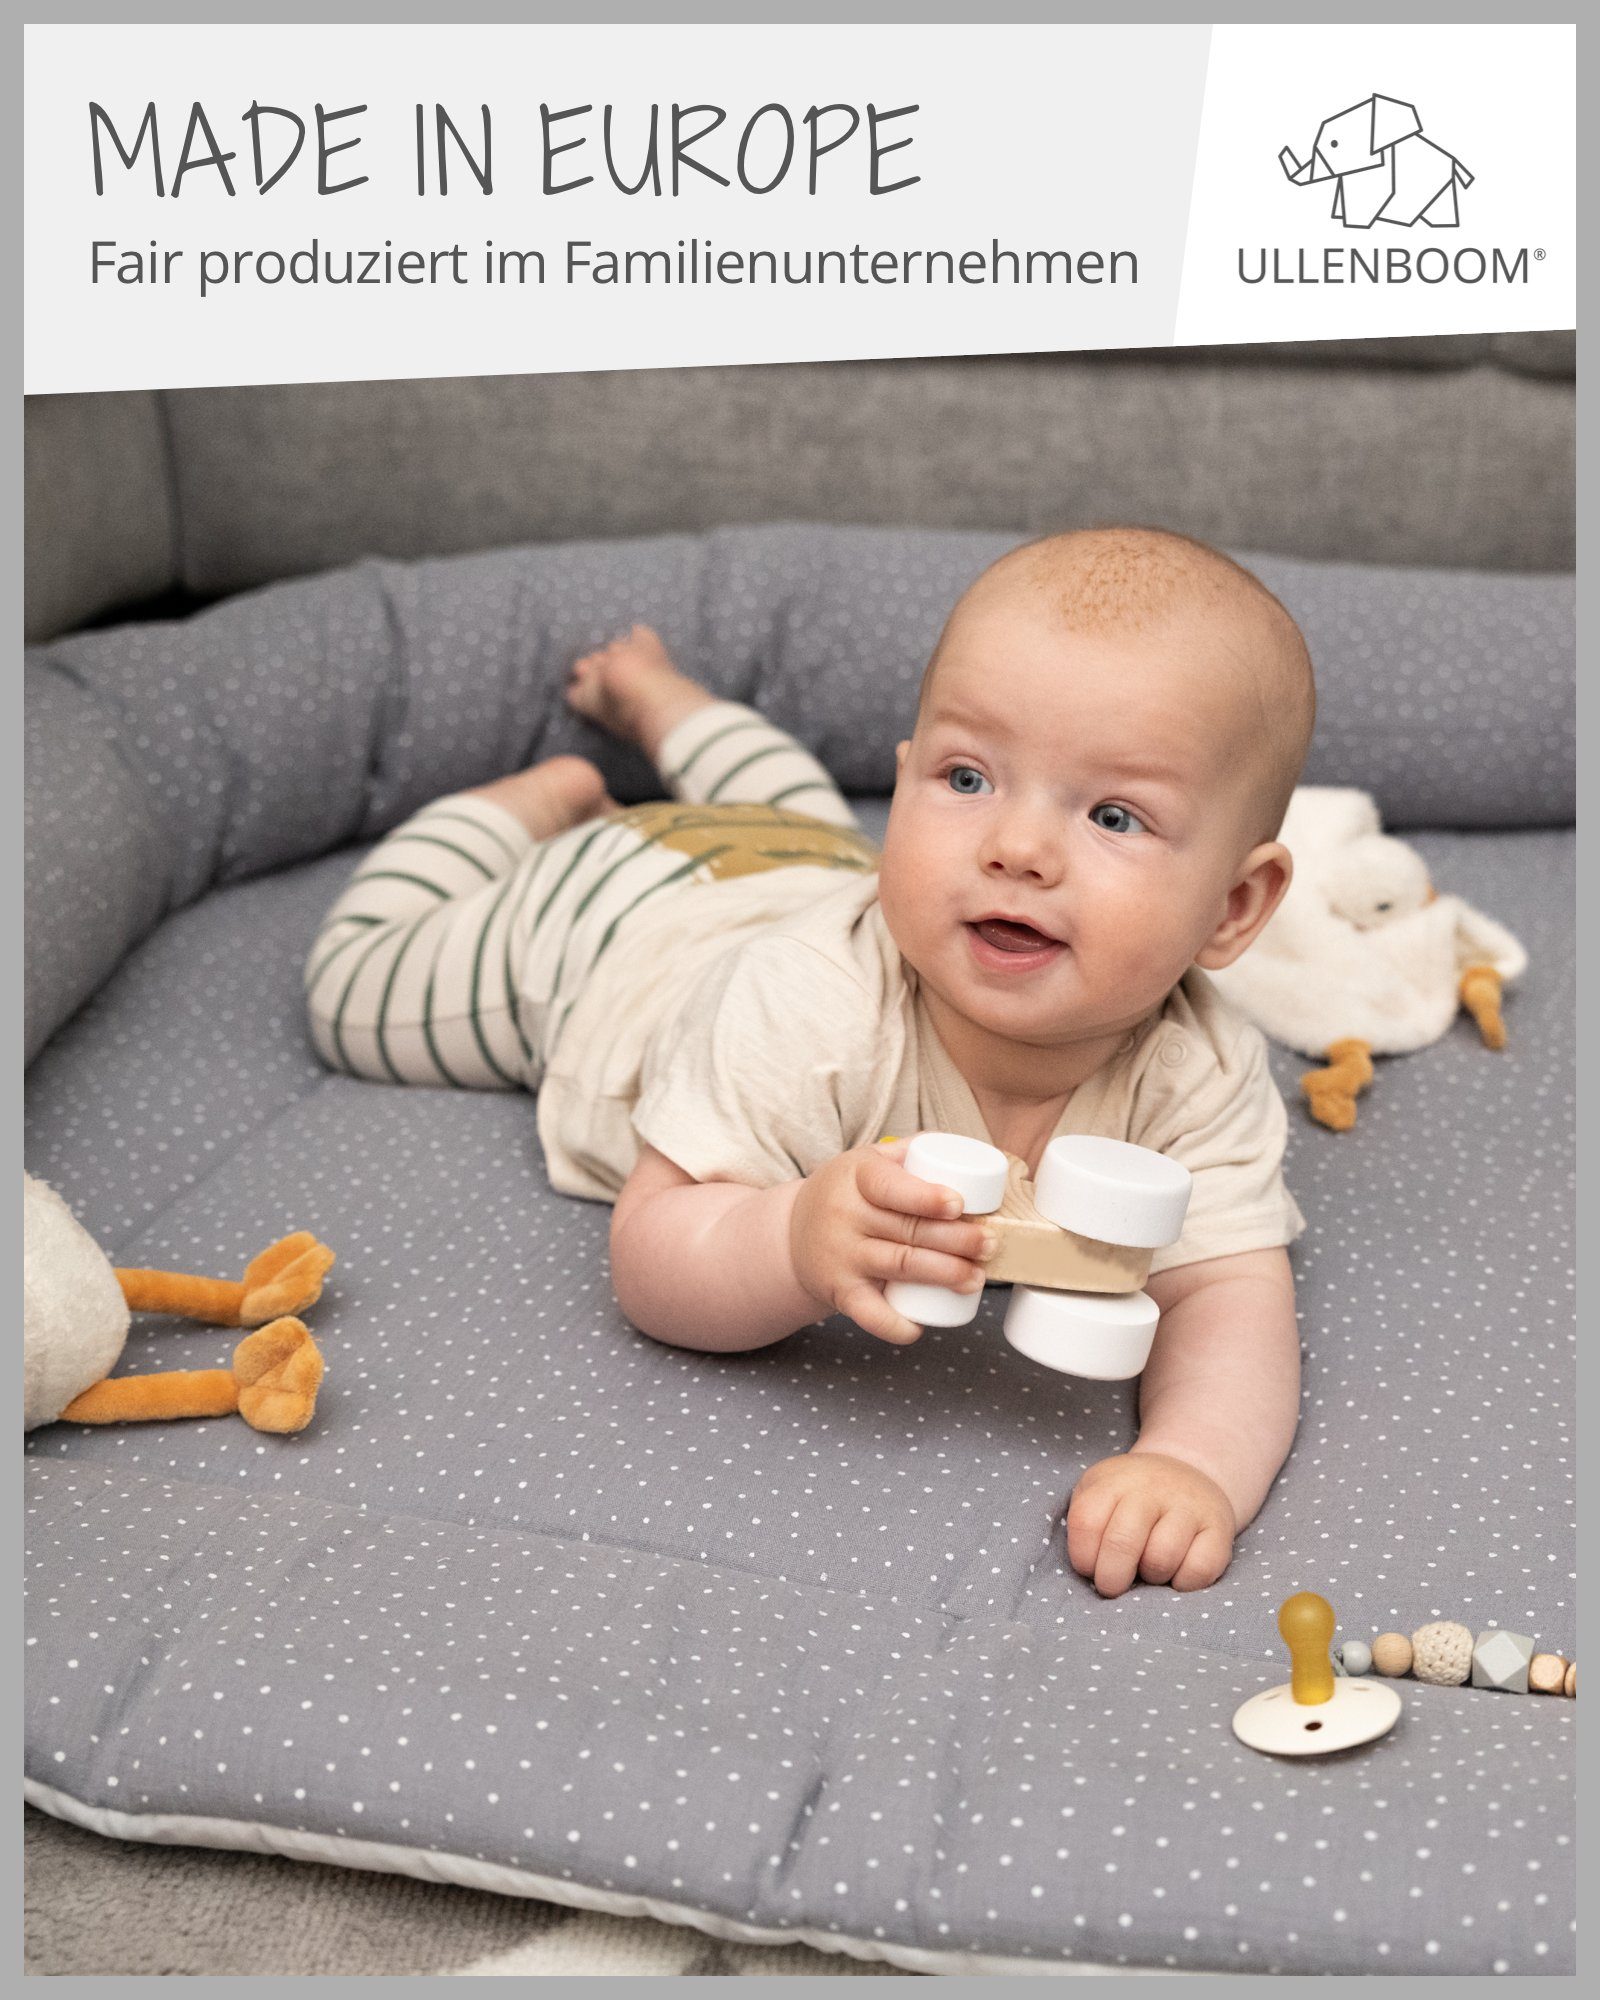 Krabbeldecke Baby EU), in Dick verschiedenen Grau" Größe (Made "Musselin in Baumwolle, Außenstoff 100% gepolstert, ®, ULLENBOOM Krabbeldecke